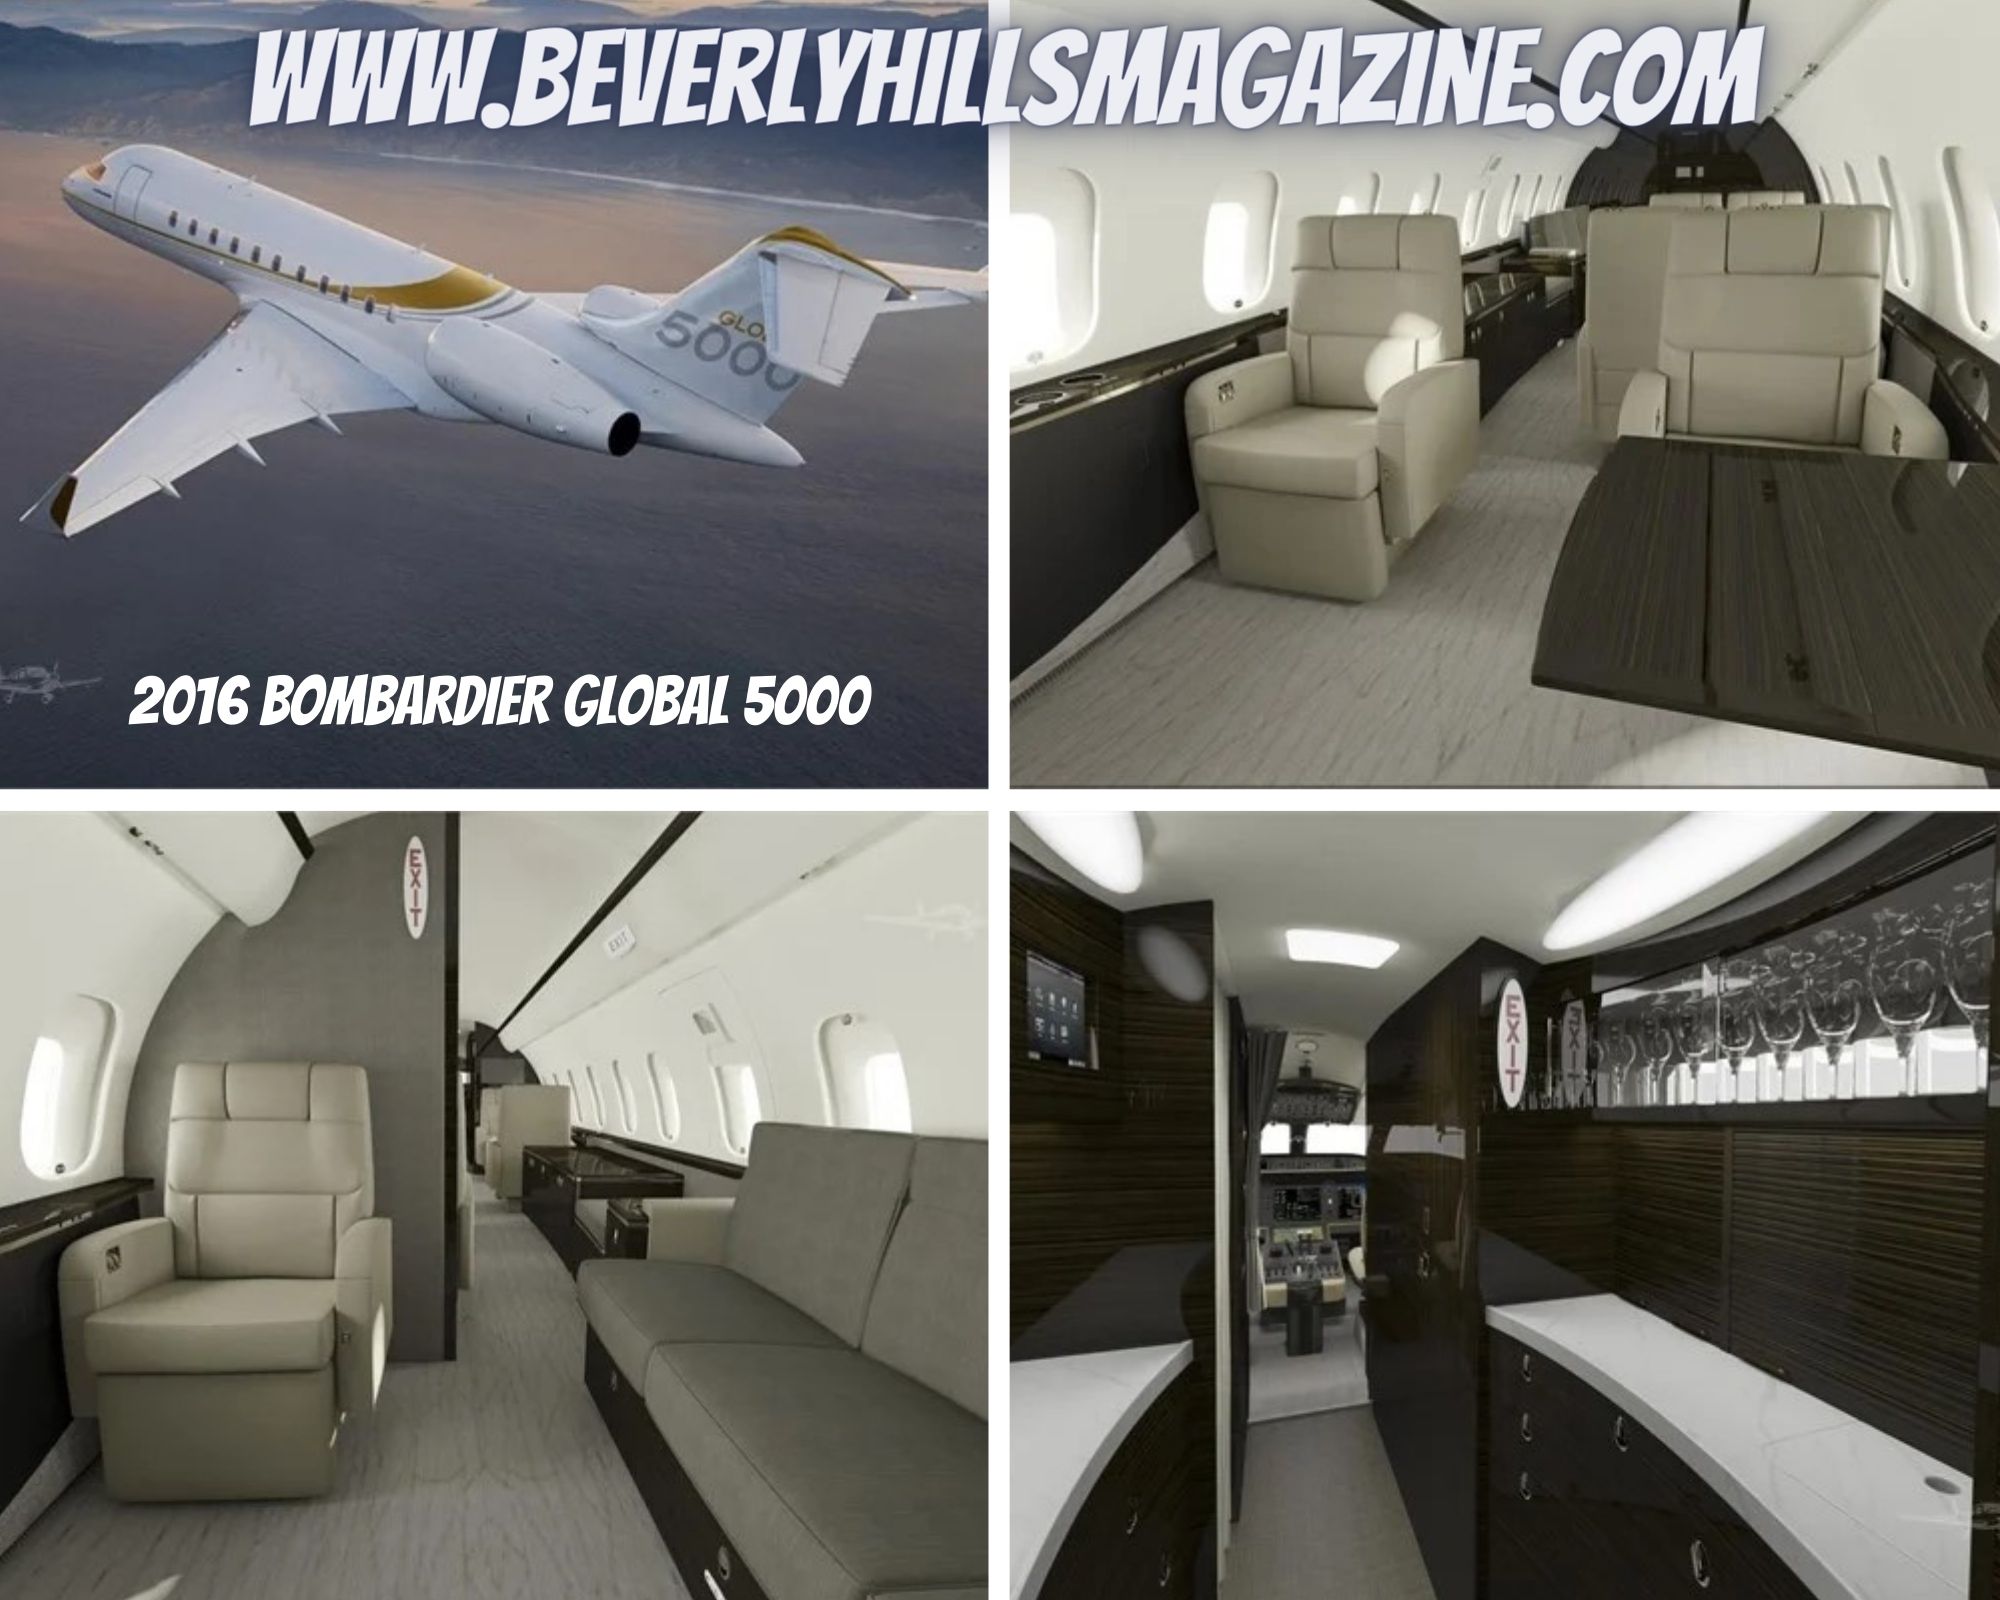 2016 Bombardier Global 5000 Private Jet #privatejets #beverlyhills #beverlyhillsmagazine #jetaircraft #luxury #jets 